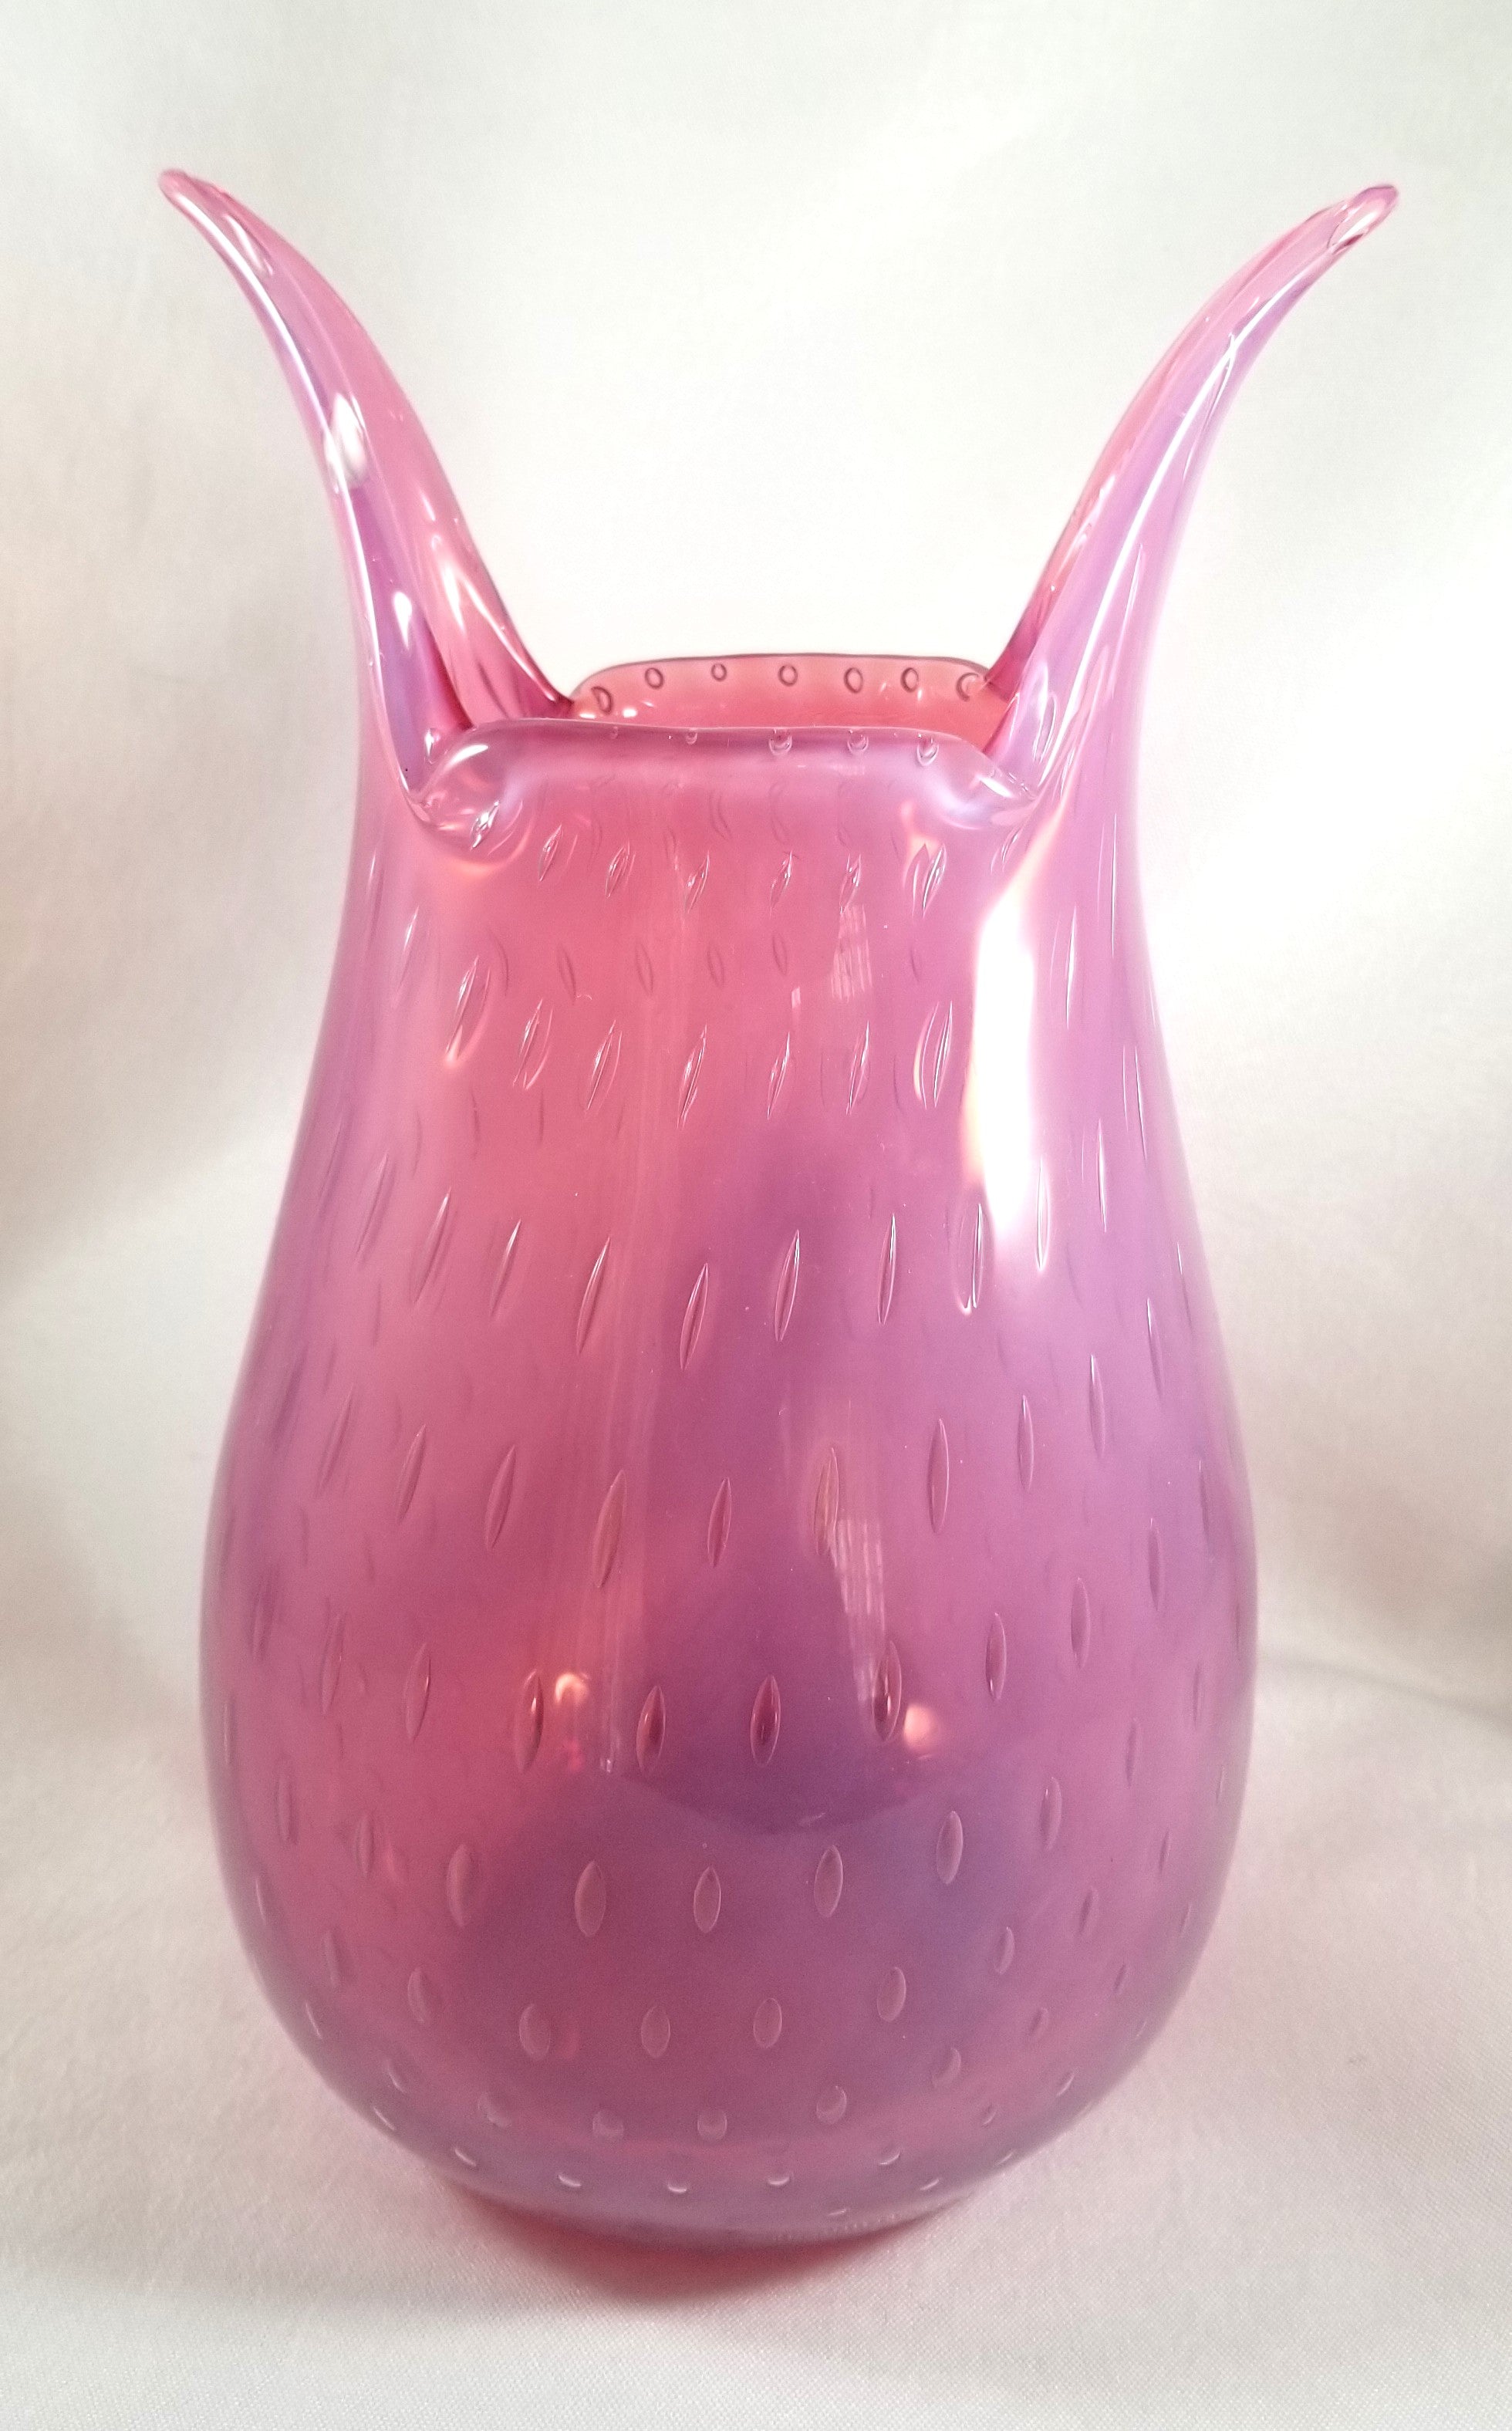 Antique Burnt Pink Mercury Glass Vase: A Timeless Treasure